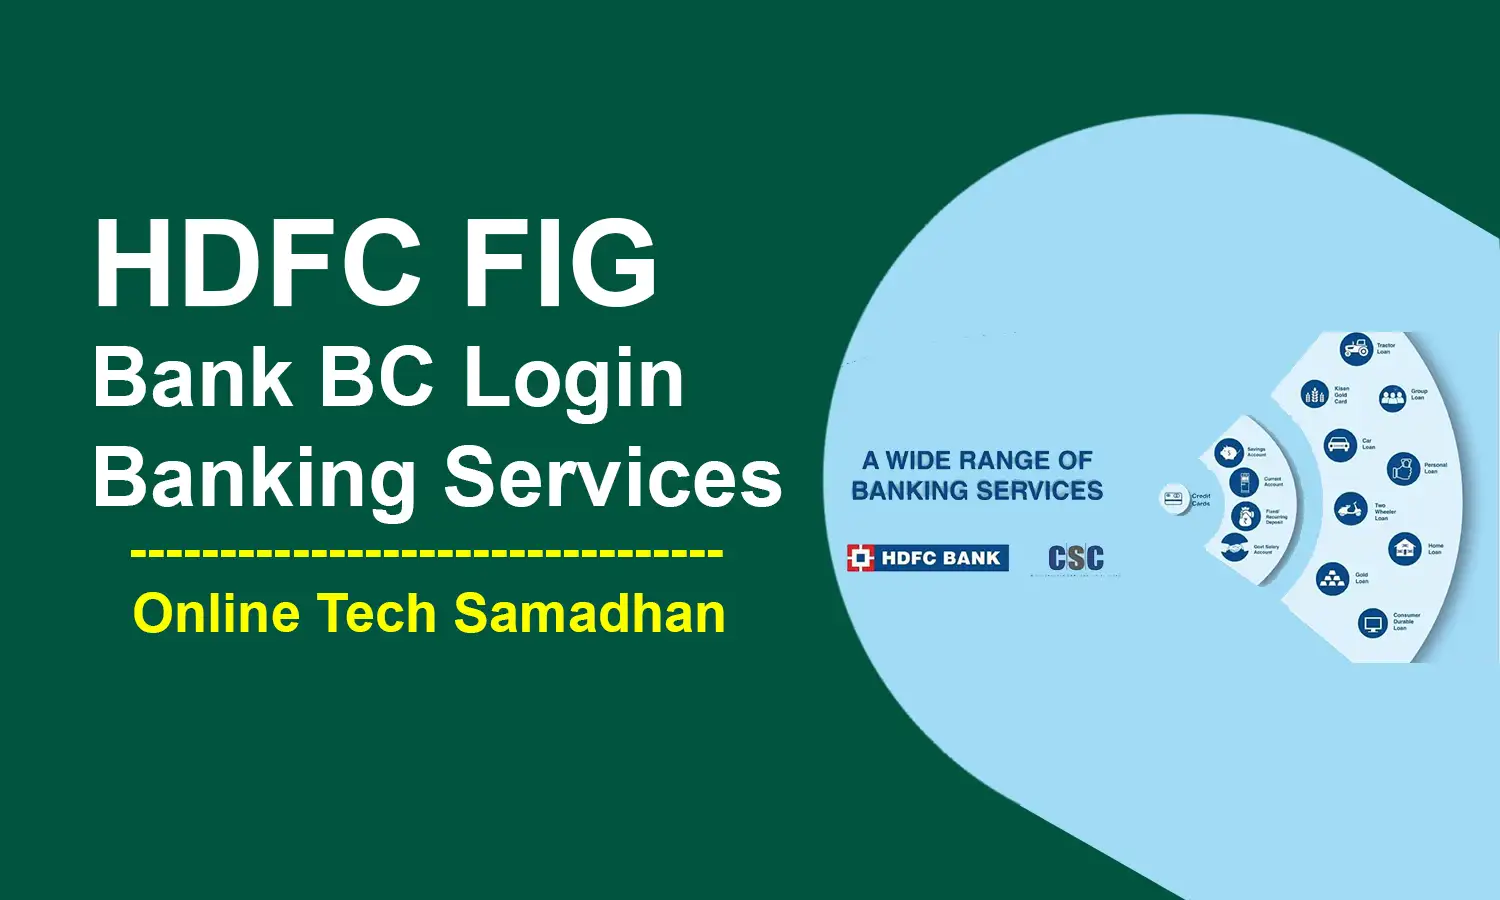 HDFC FIG Bank BC Login